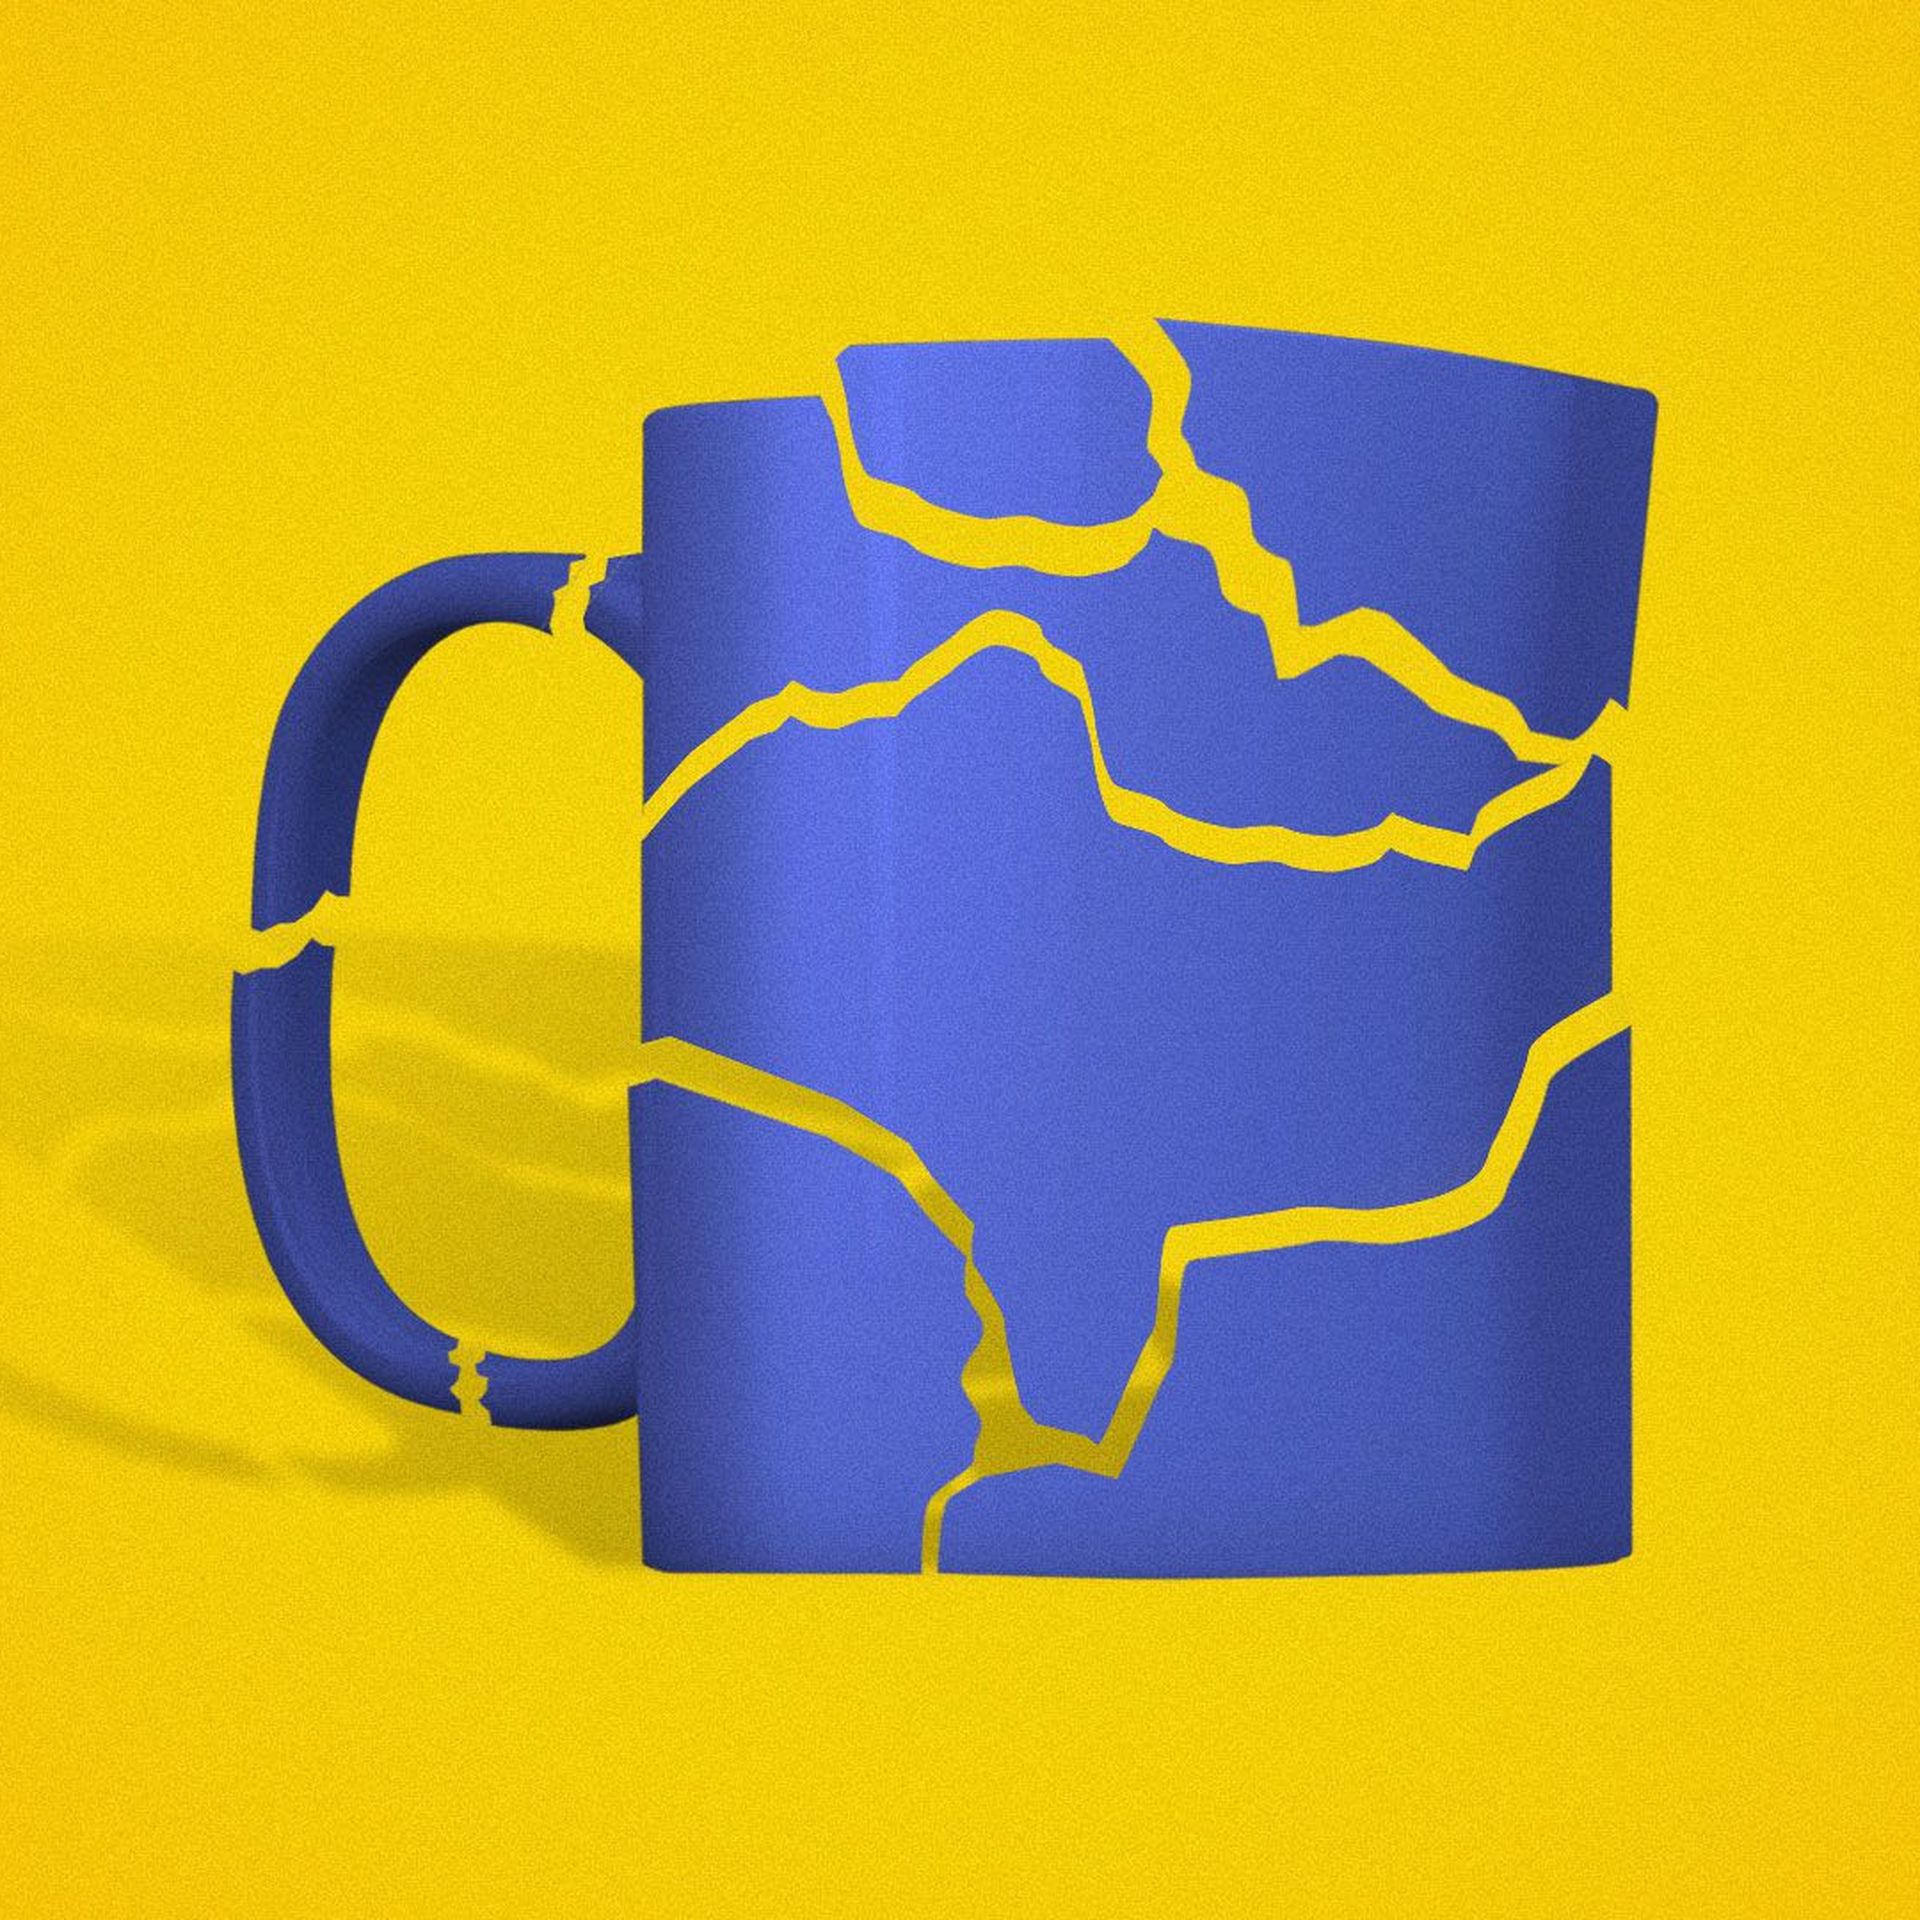 An illustration of a broken coffee mug